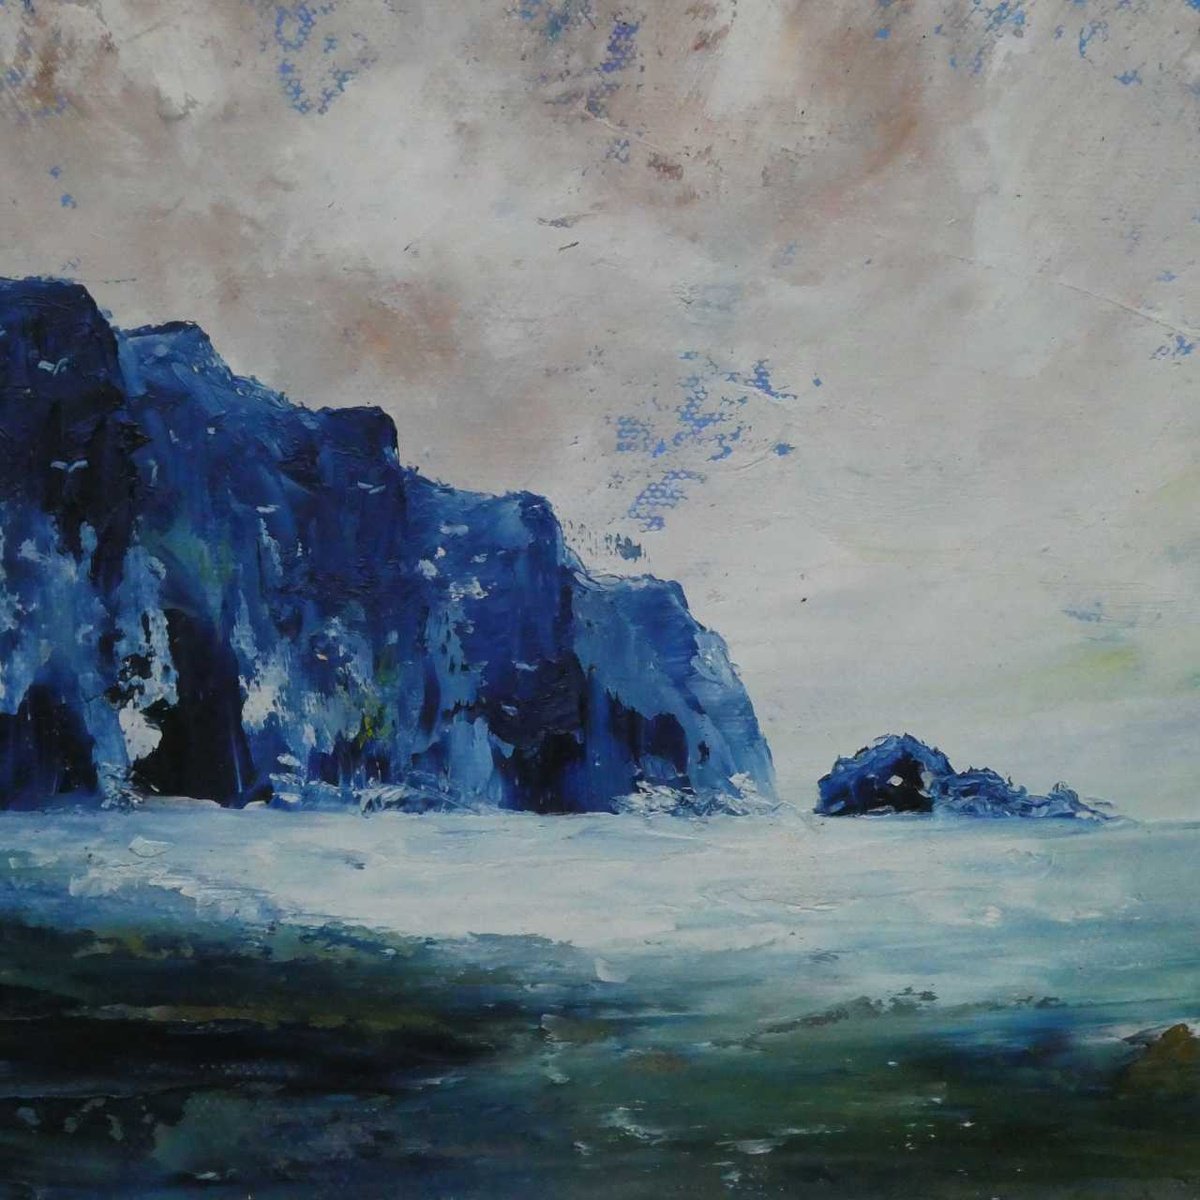 Winter Sea Cliffs by oconnart